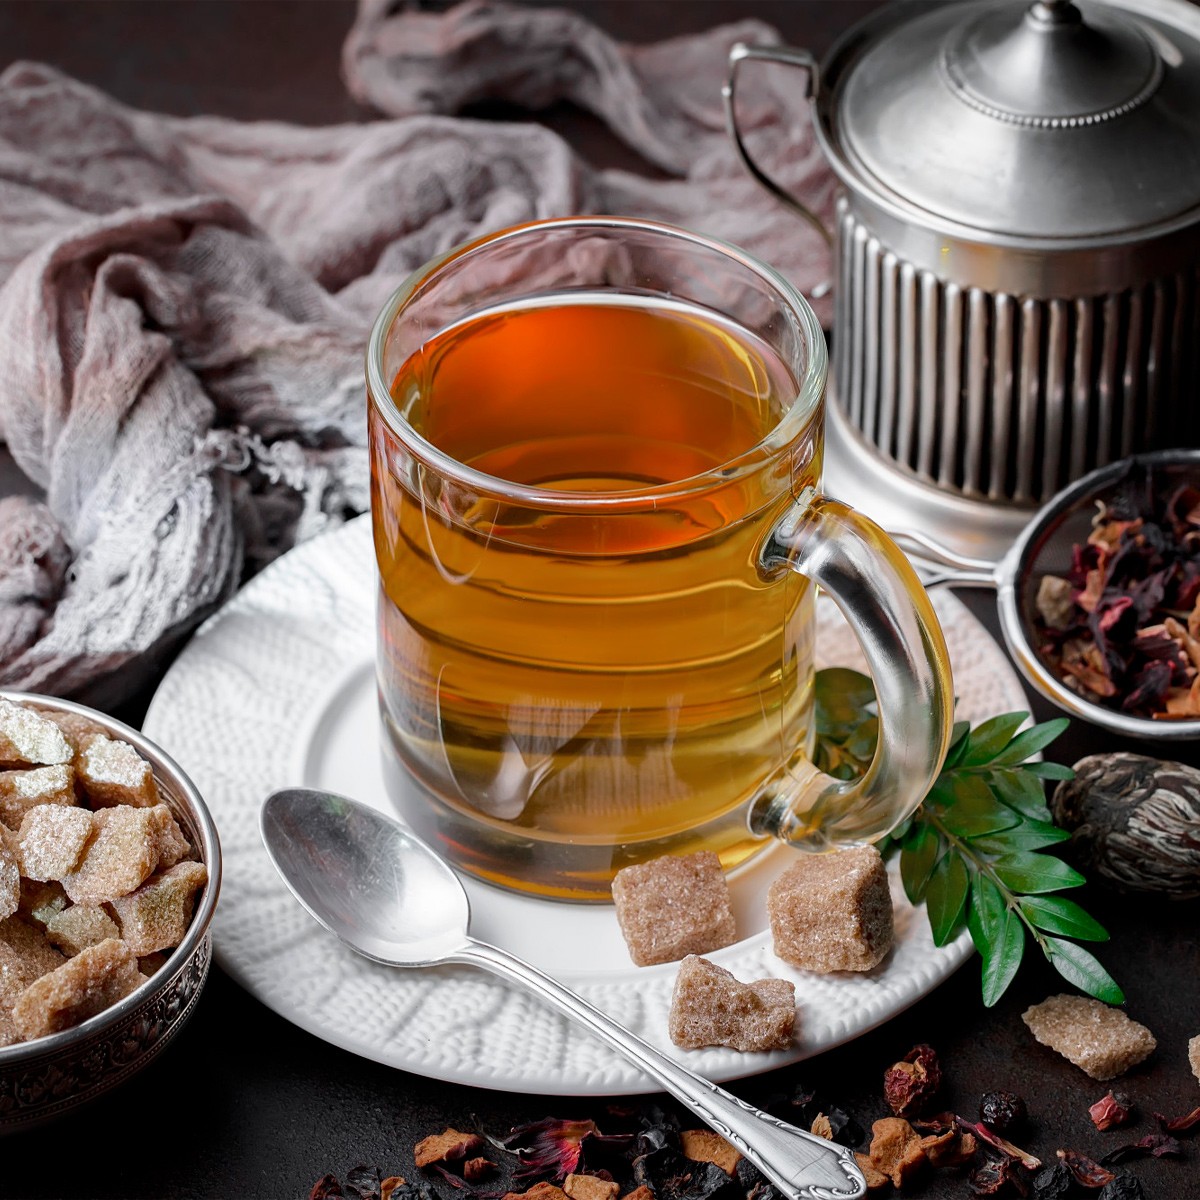 Chá de Calumba Raiz – Jateorhiza Palmata – 50g